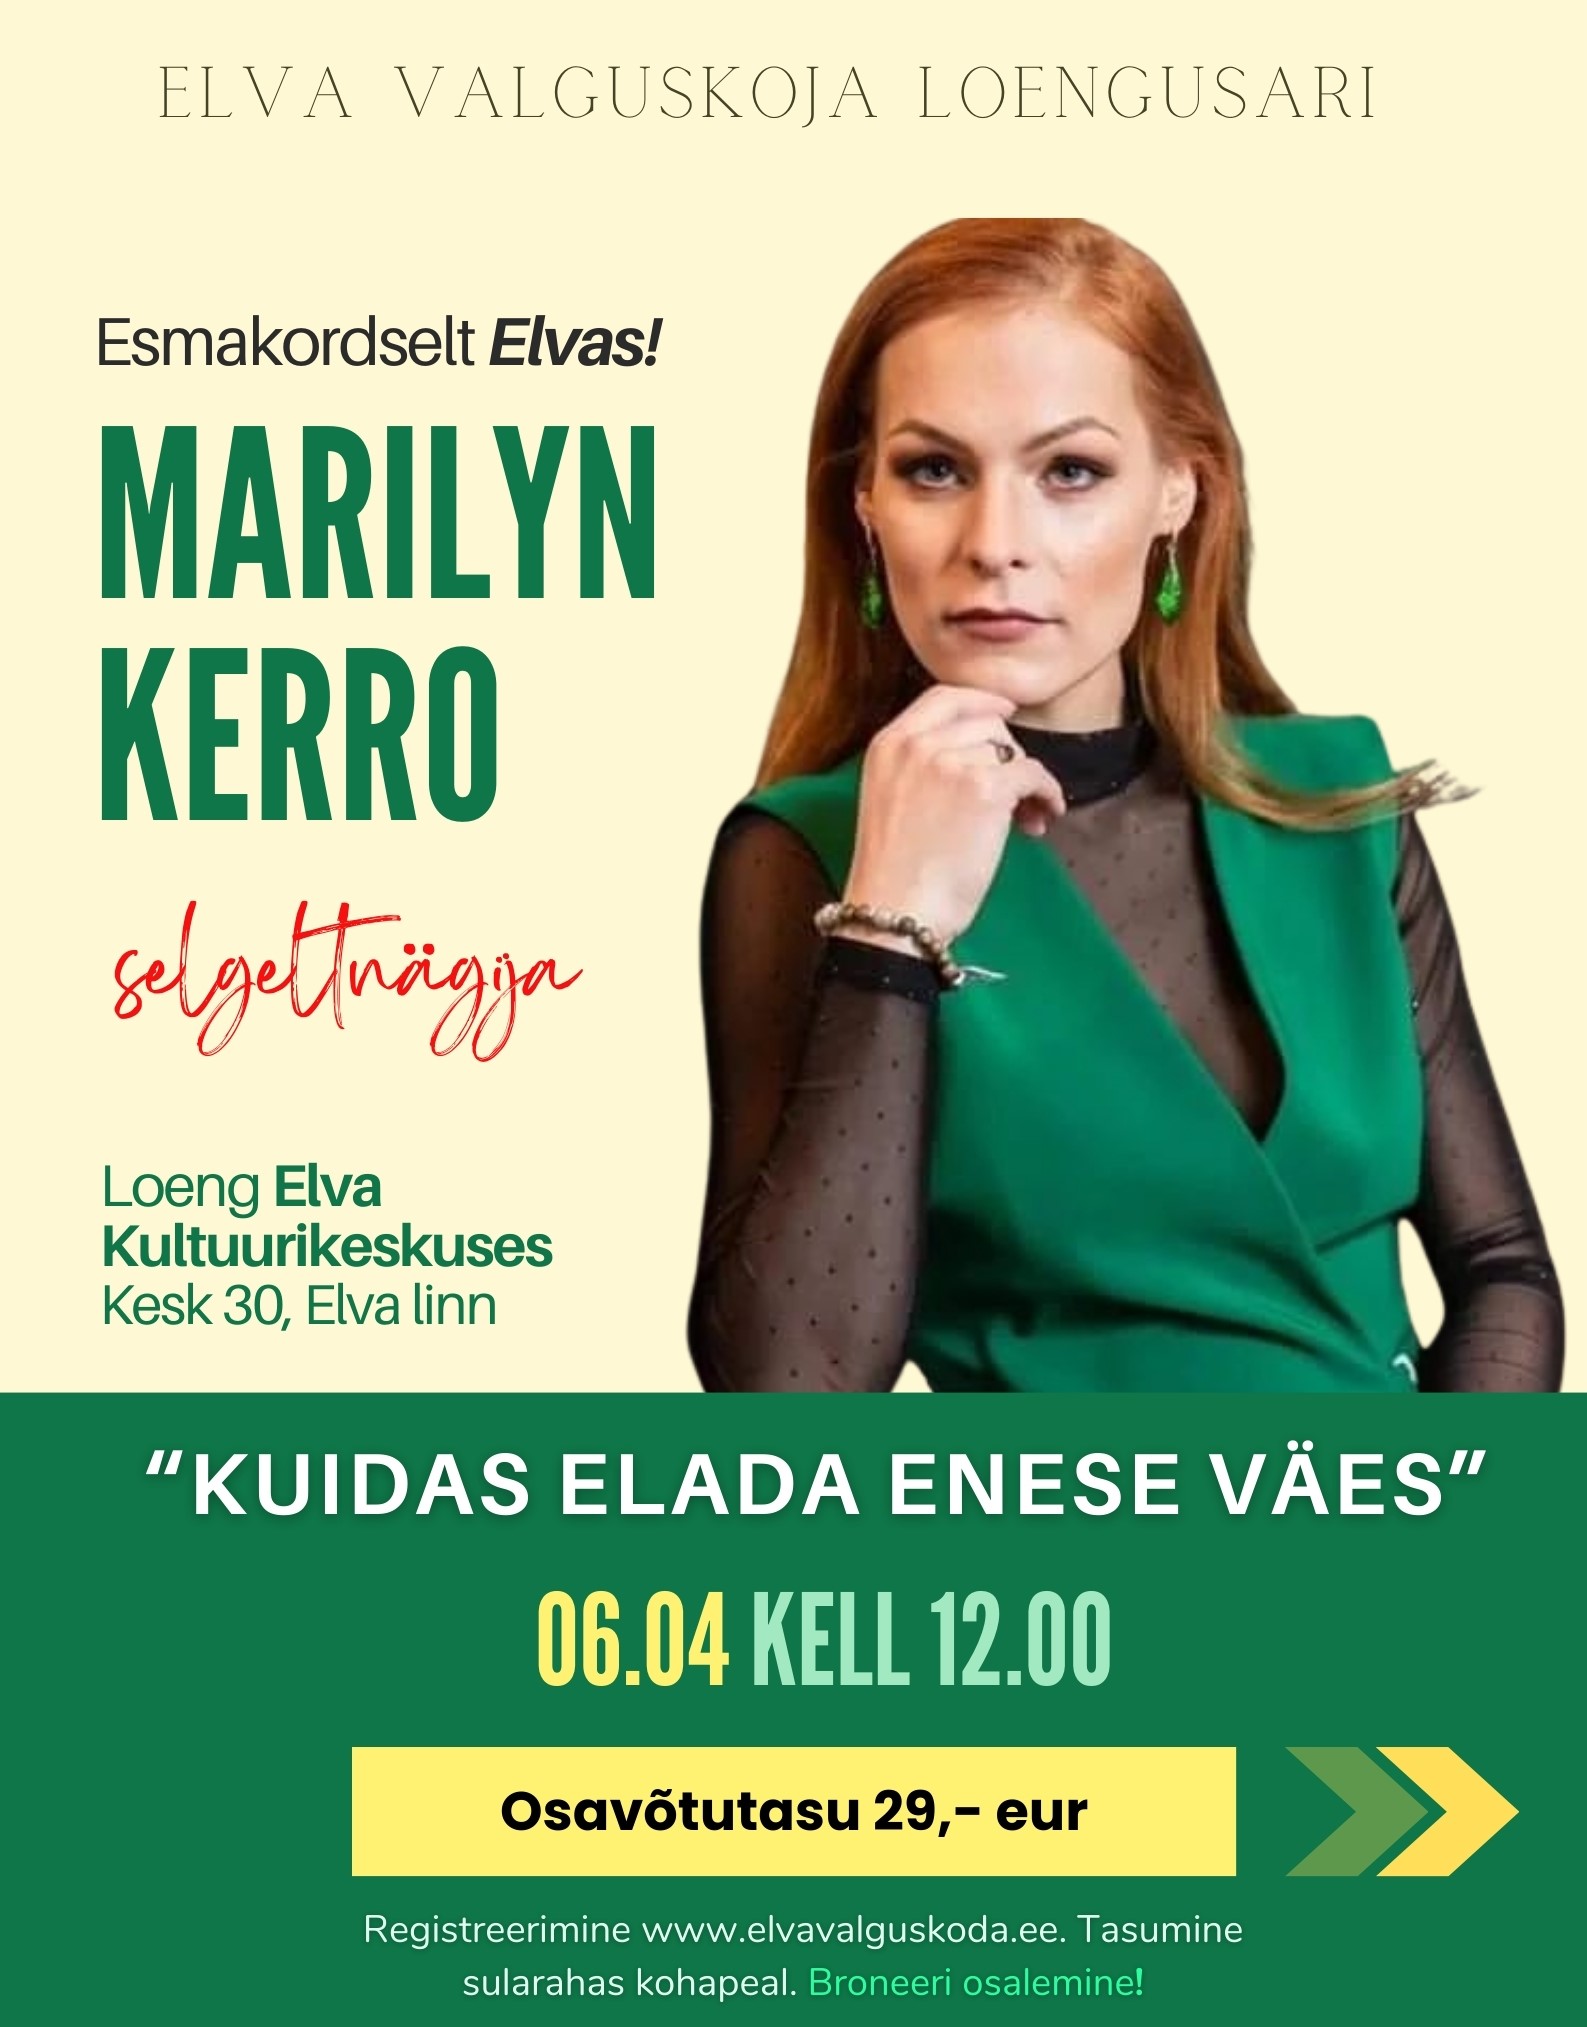 Marilyn Kerro loeng - Enese väes elamine - Elva Kultuurikeskuses 06.04 kell 12.00